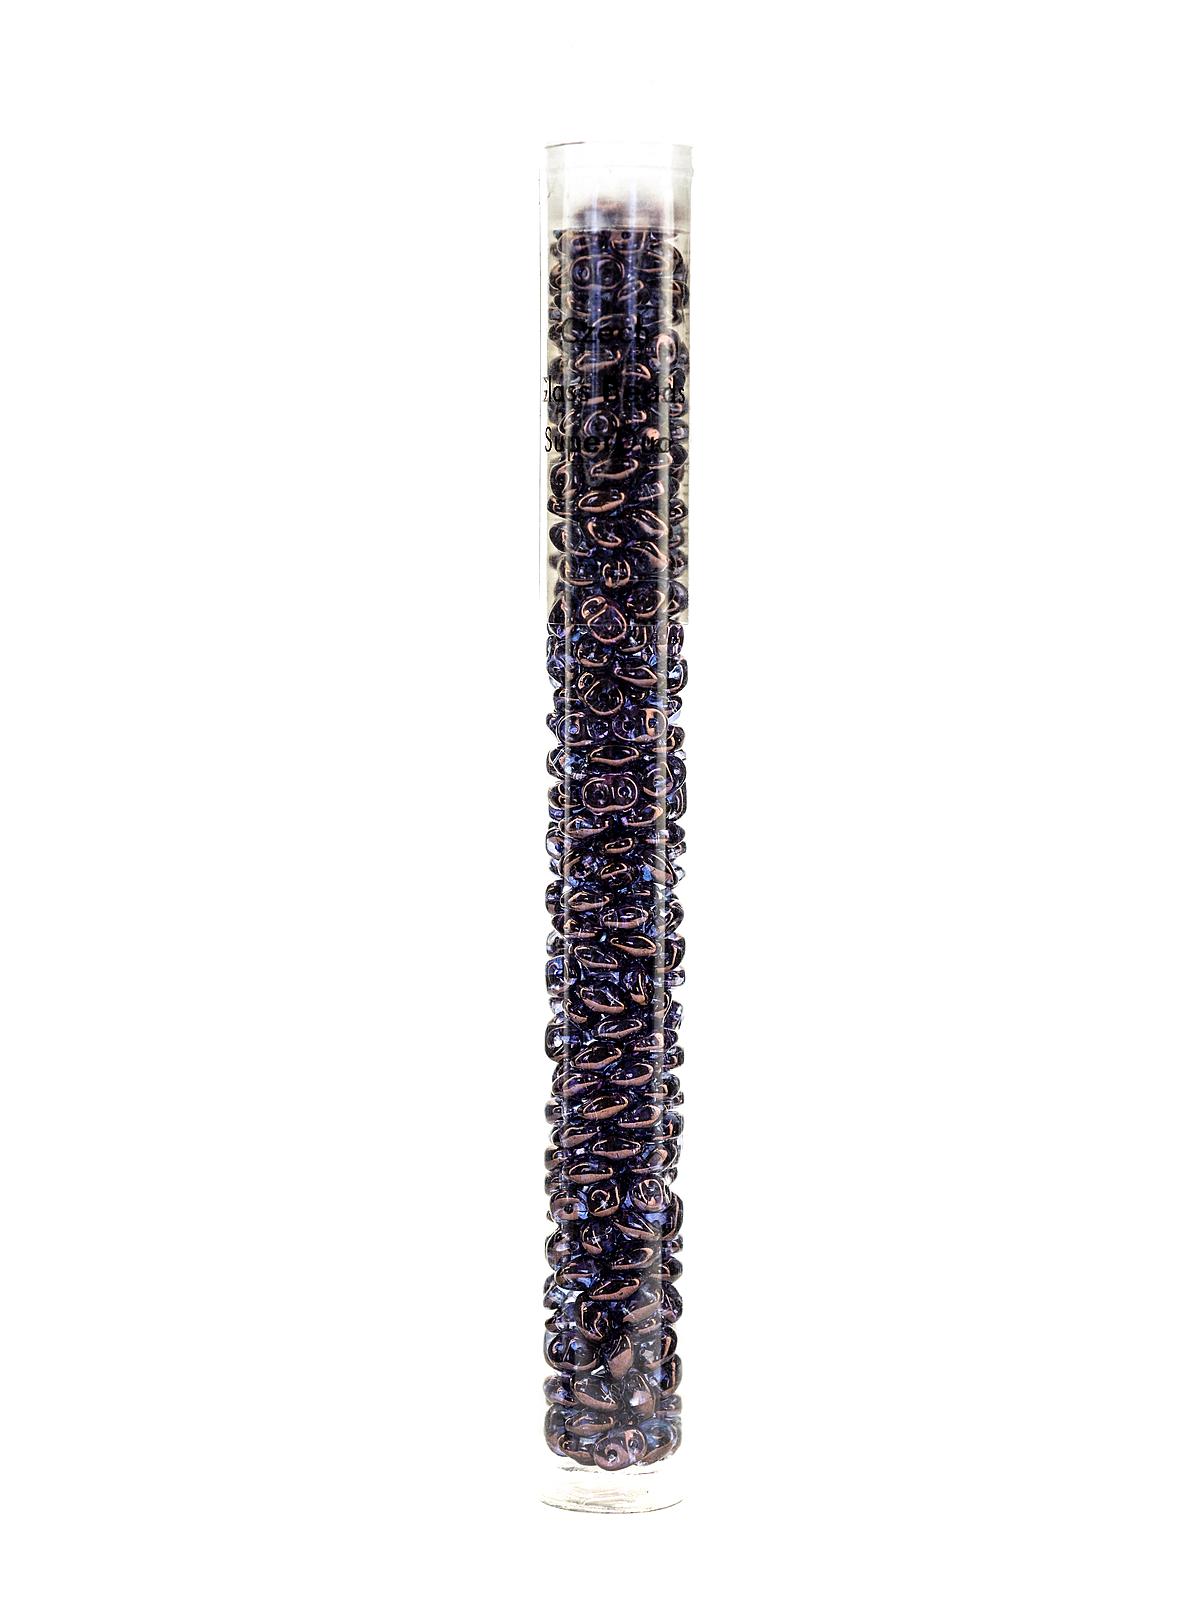 Super Duo Beads Vega On Crystal 2.5 Mm X 5 Mm 24 Gm Tube